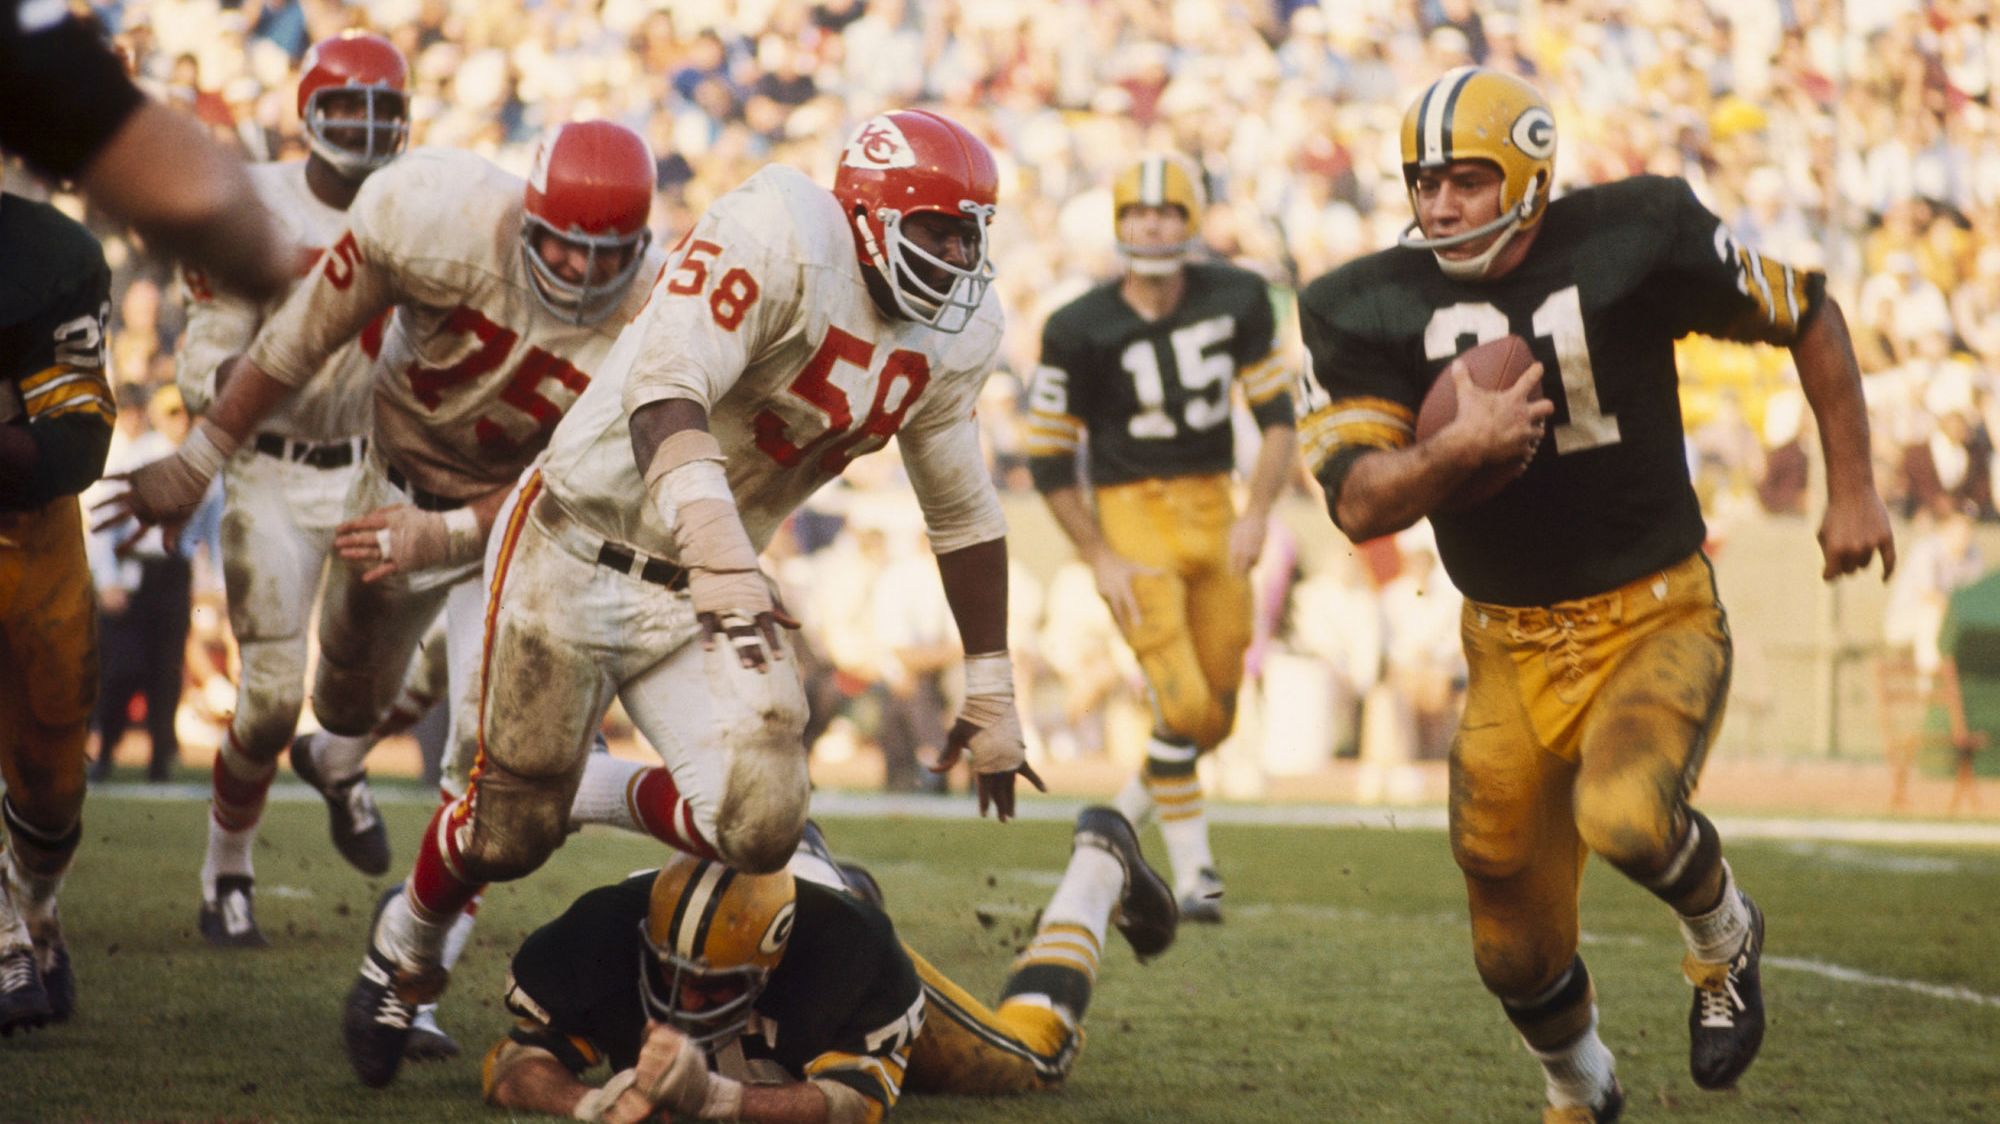 Want to See the Original 1967 Super Bowl I Broadcast? A Kickstarter